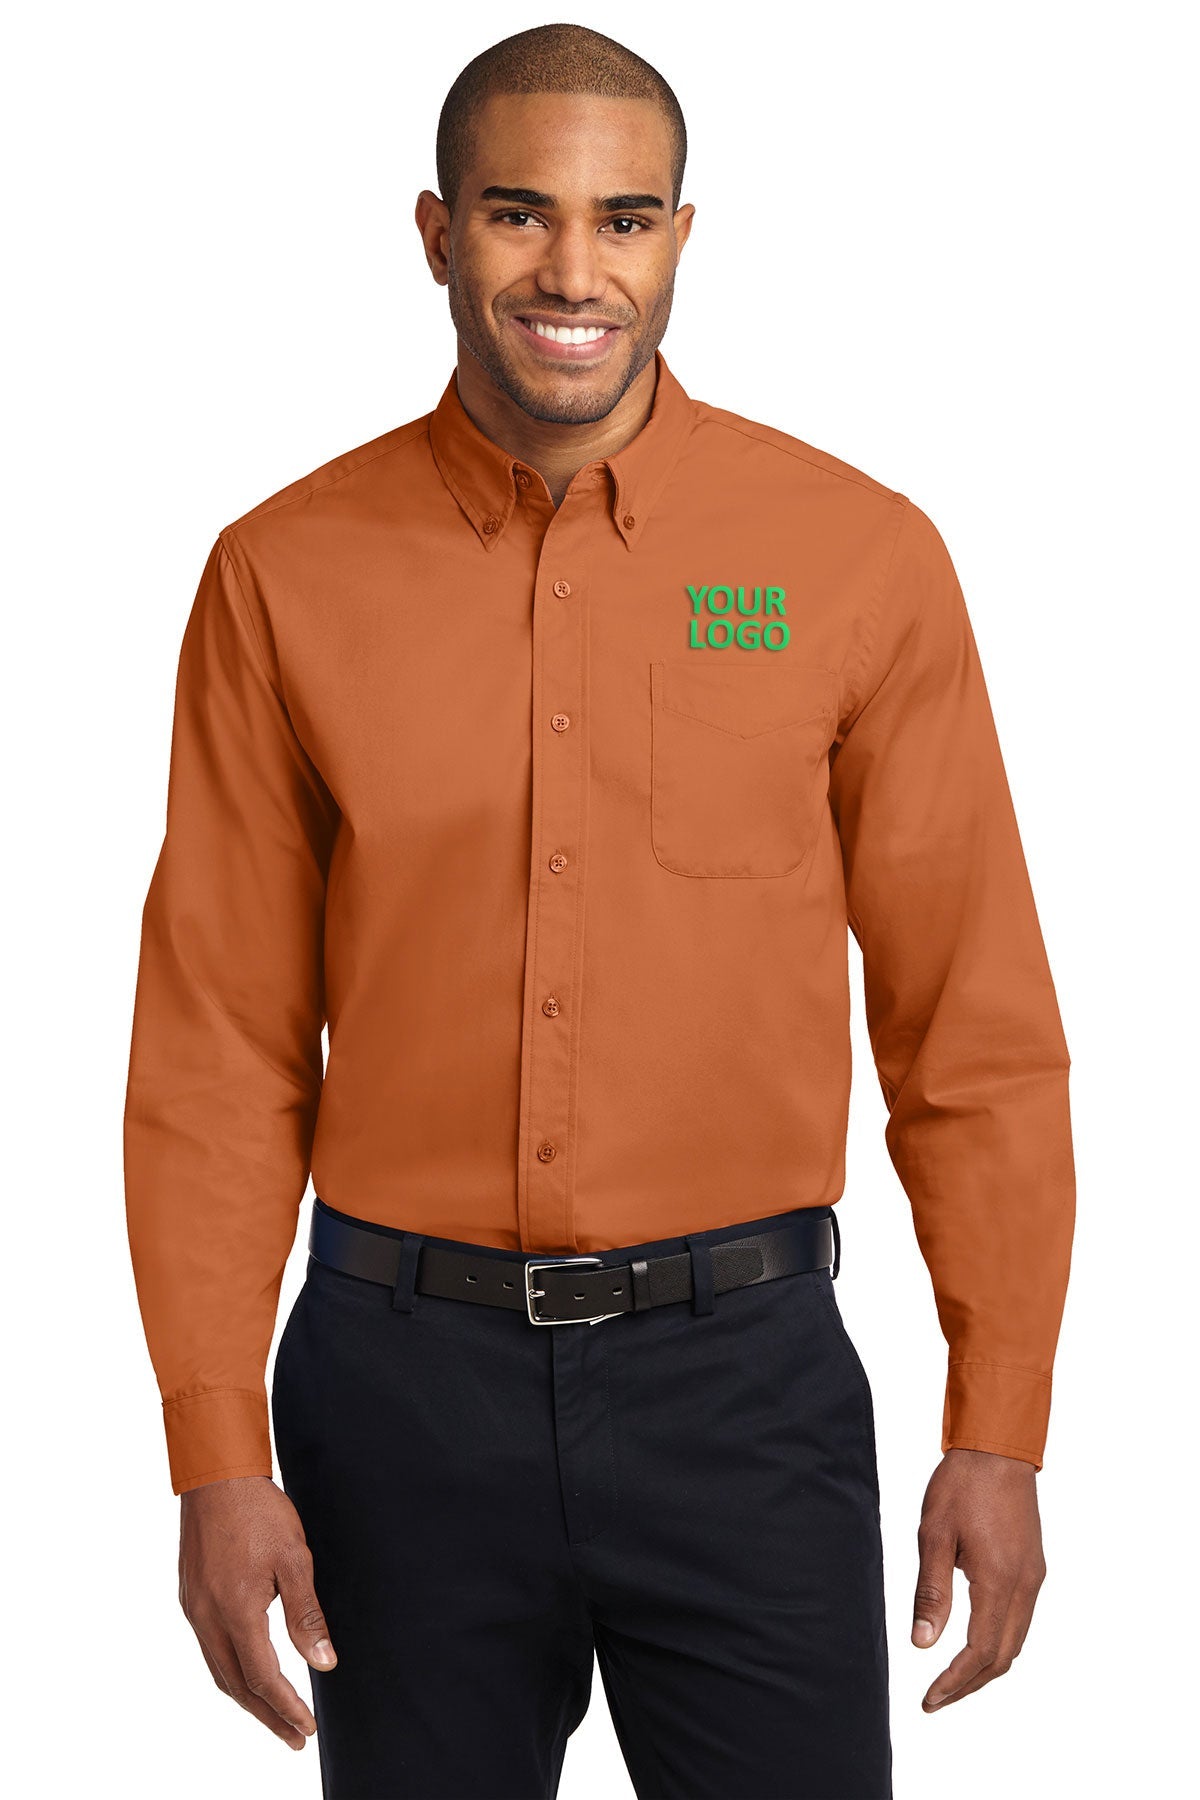 Port Authority Texas Orange/Light Stone S608ES order embroidered polo shirts